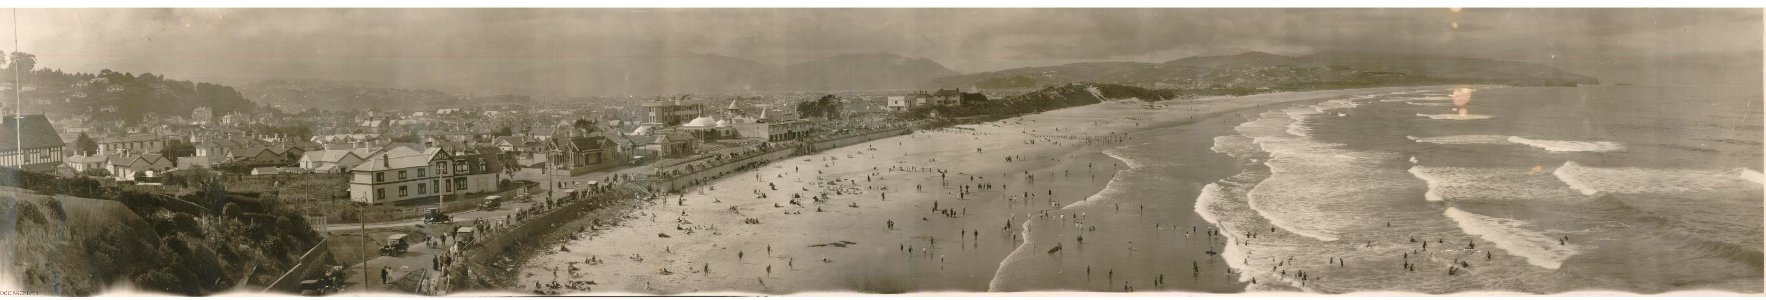 St Clair and St Kilda Beaches c1925 photo